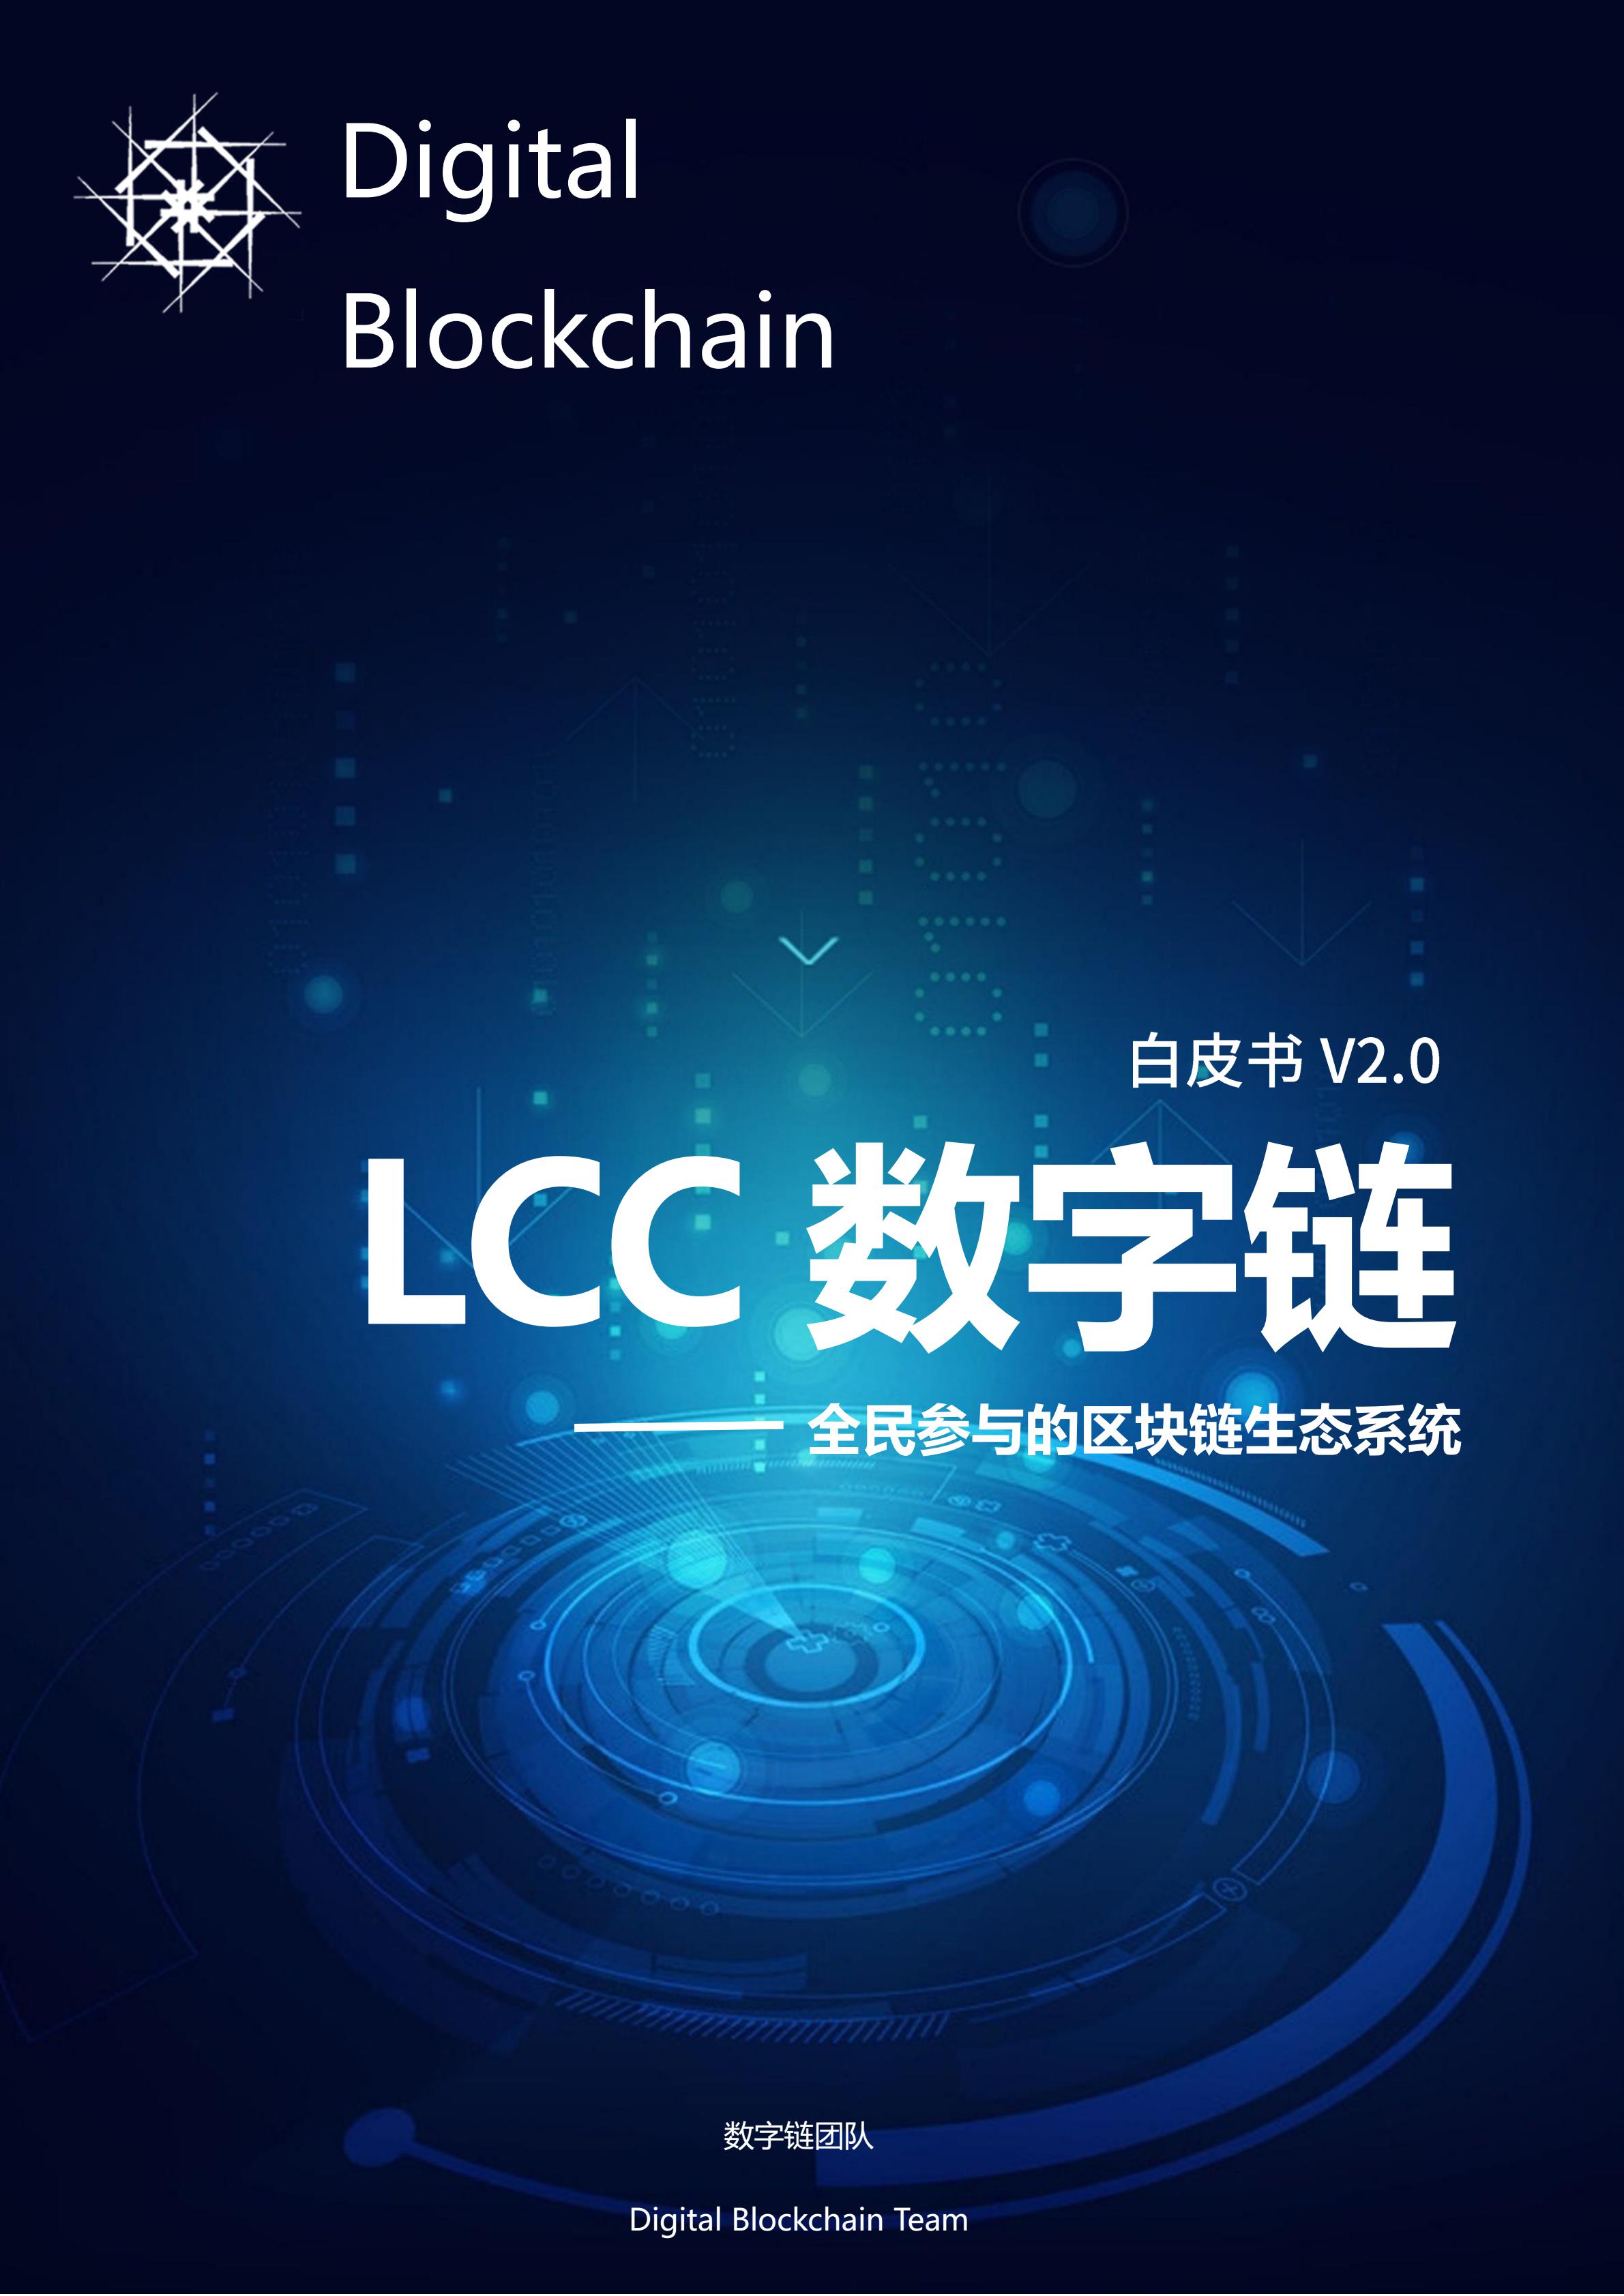 LCC_Digital Blockchain_00.jpg